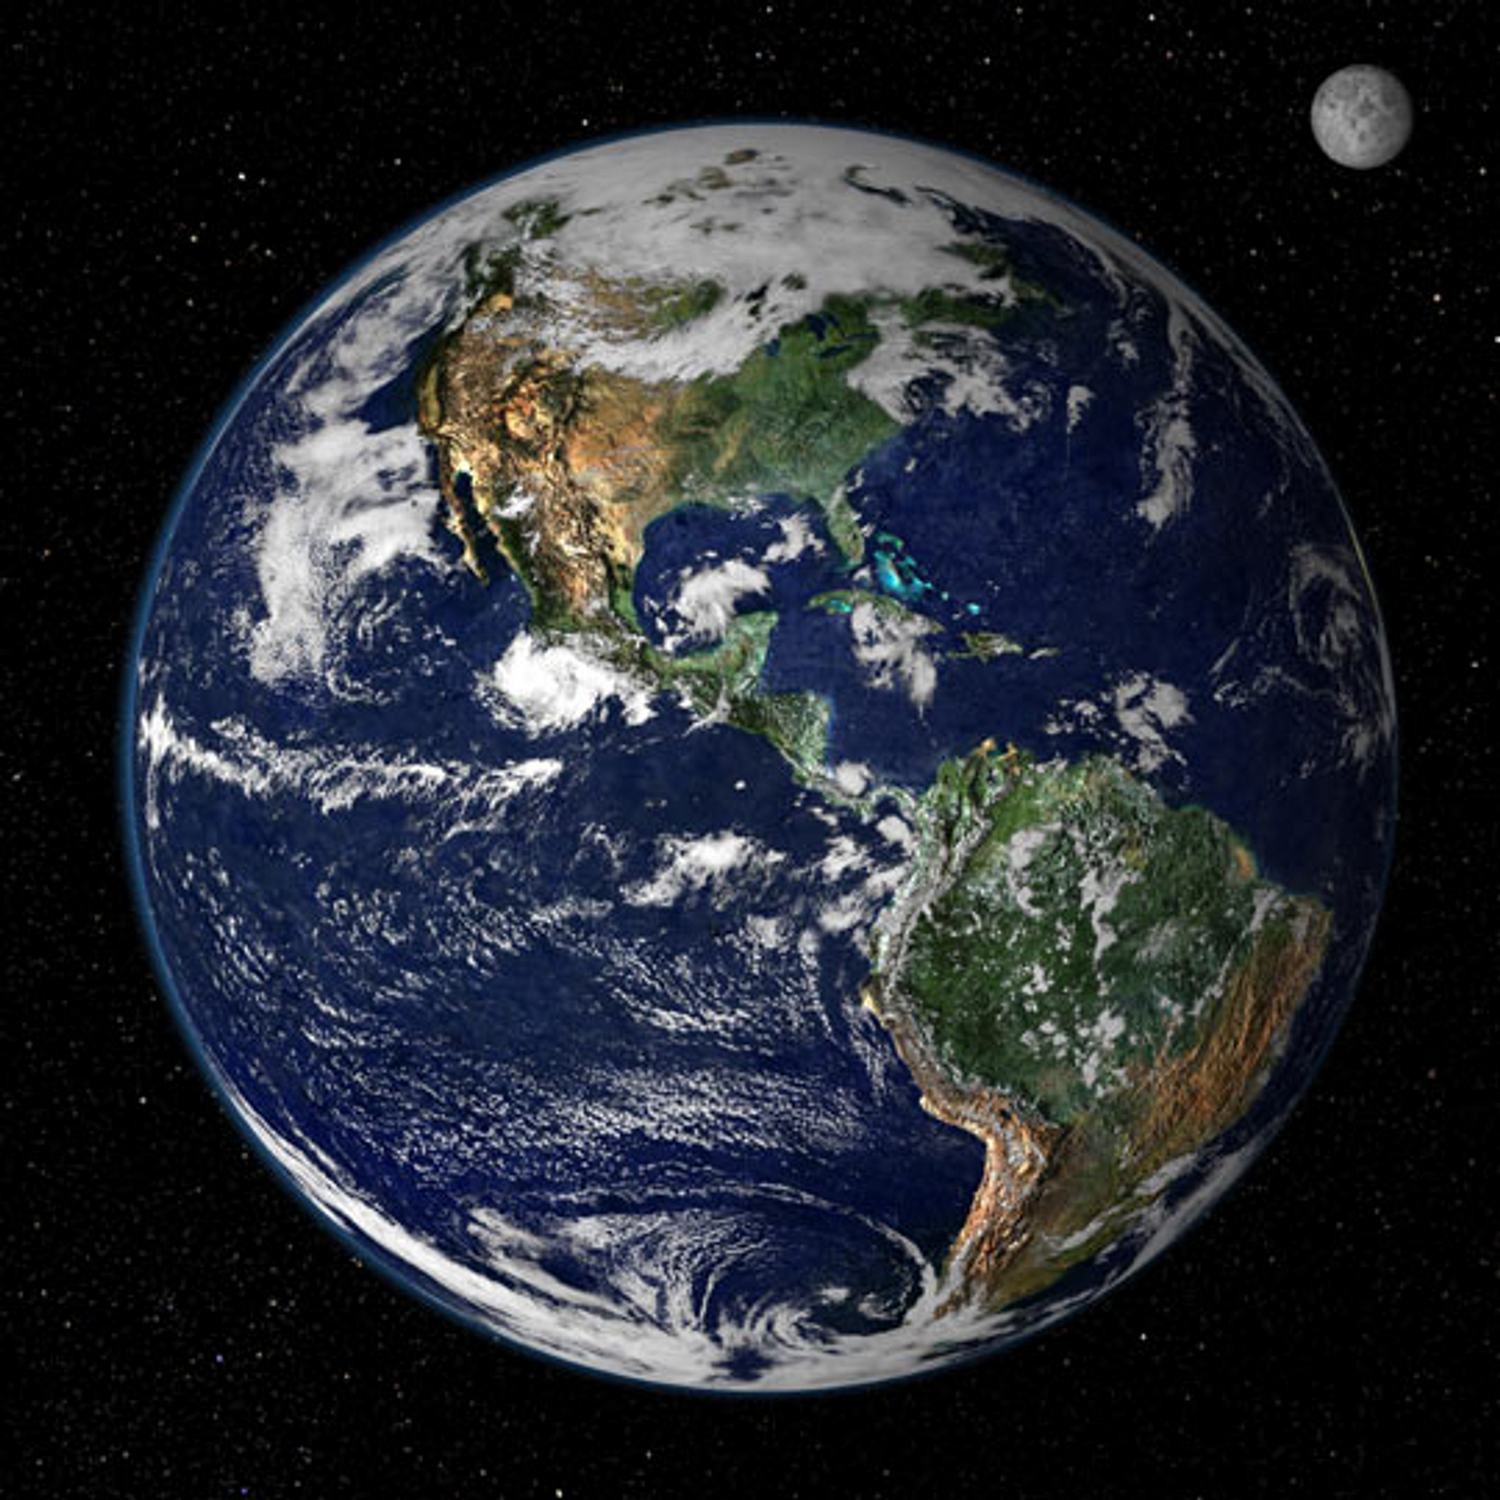 Image created by Reto Stöckli, Nazmi El Saleous, and Marit Jentoft-Nilsen, NASA GSFC
https://earthobservatory.nasa.gov/images/885/earth-from-space